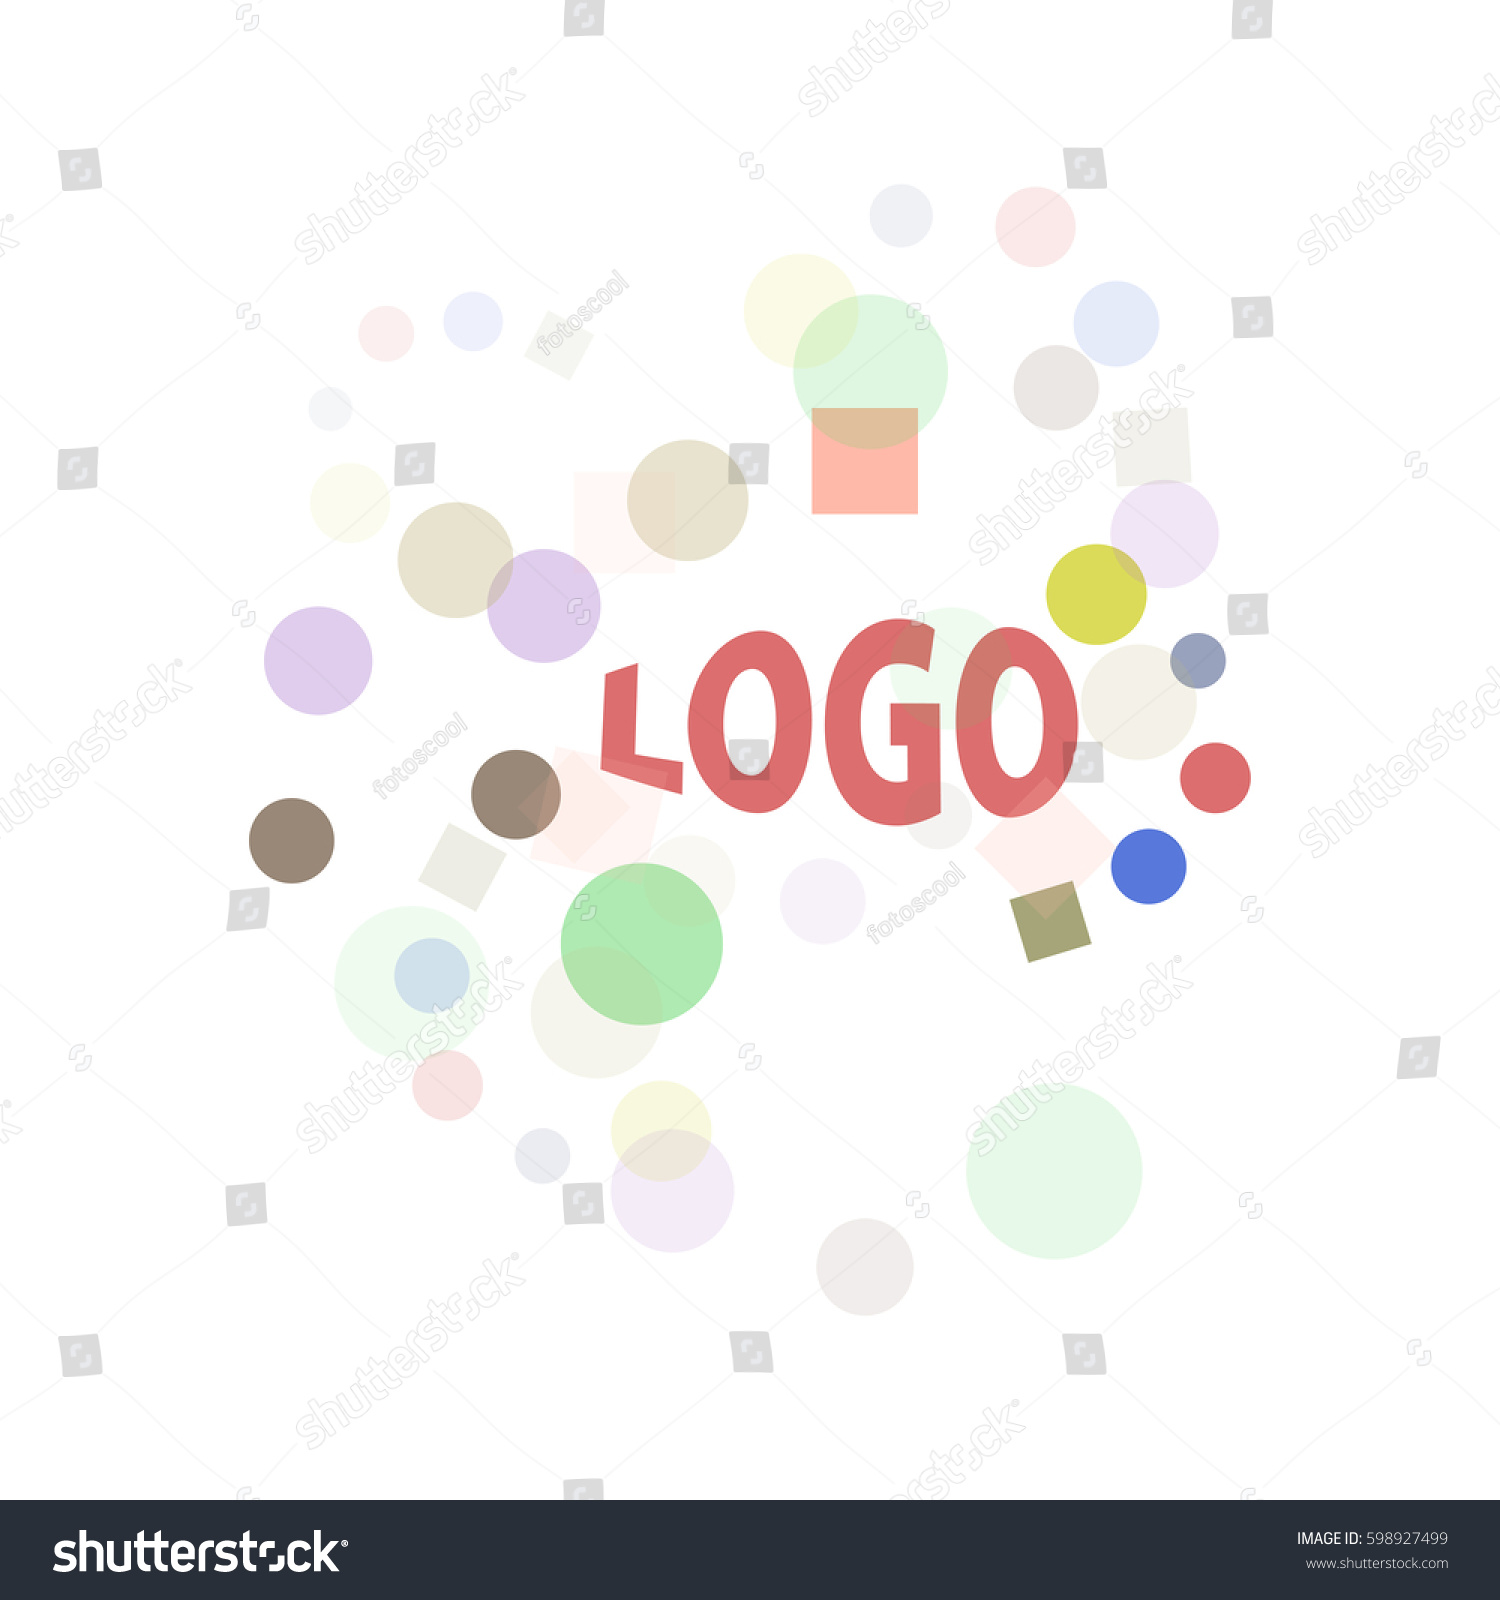 Edit Vectors Free Online - abstract logo | Shutterstock Editor